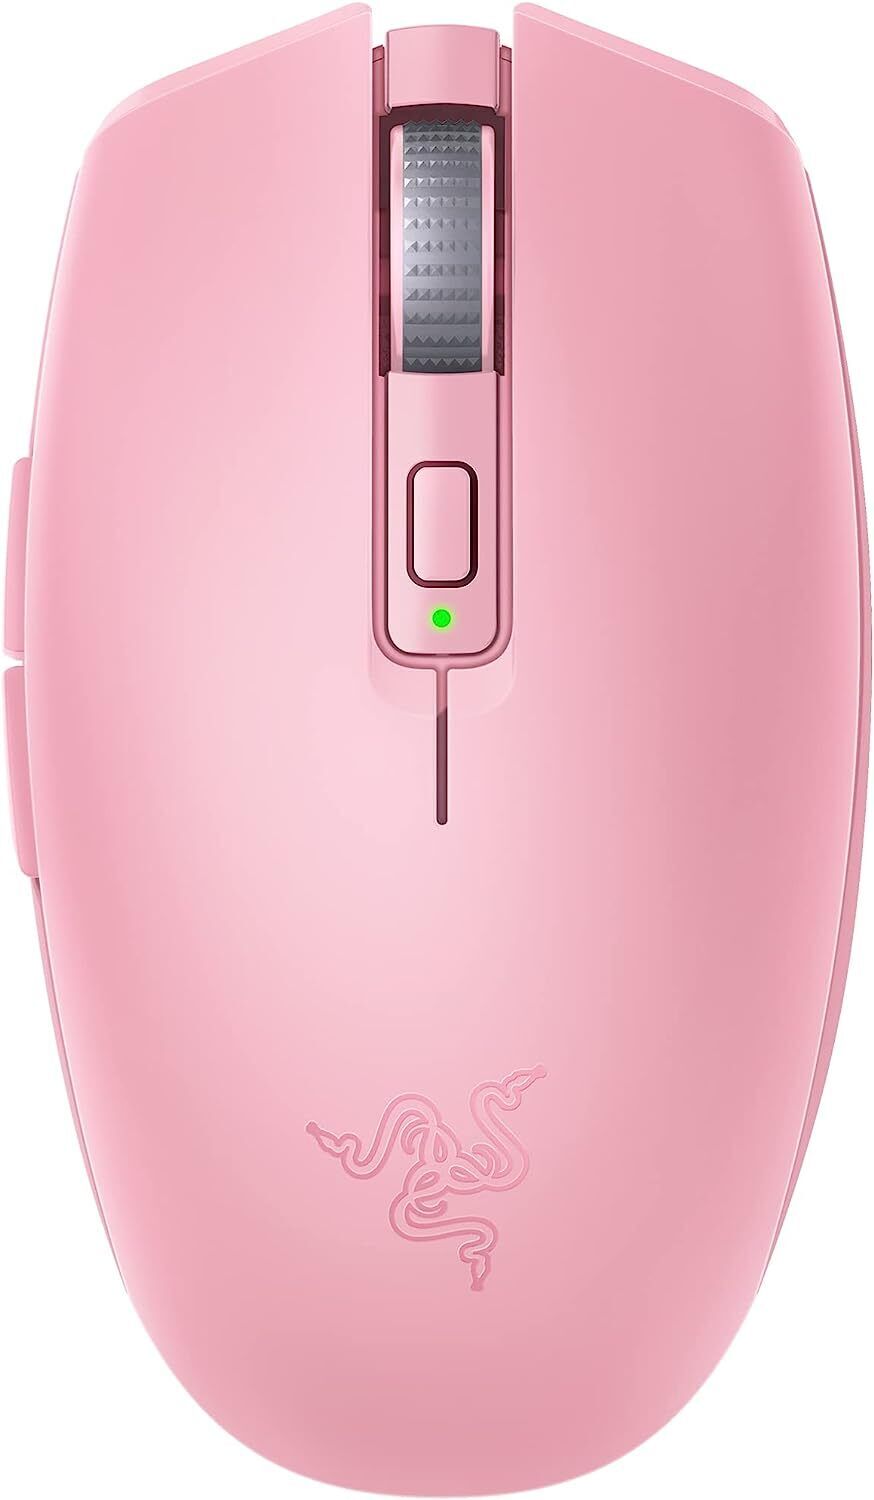 Razer Orochi V2 Wireless Optical Gaming Mouse Quartz Pink Certified Refurbished